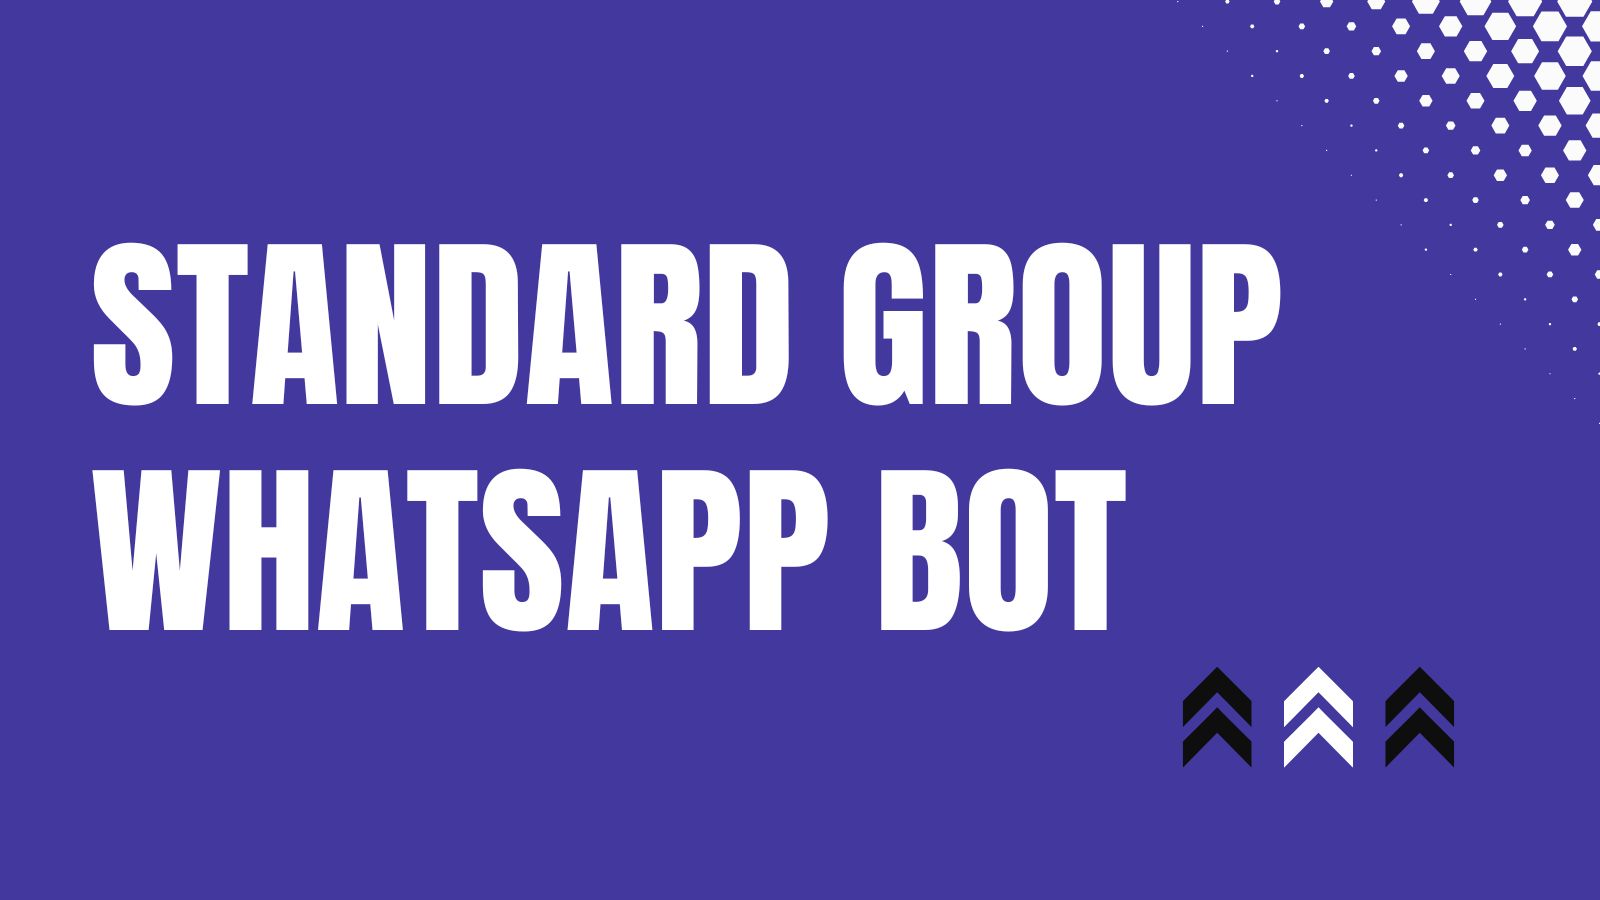 Standard Group WhatsApp Bot